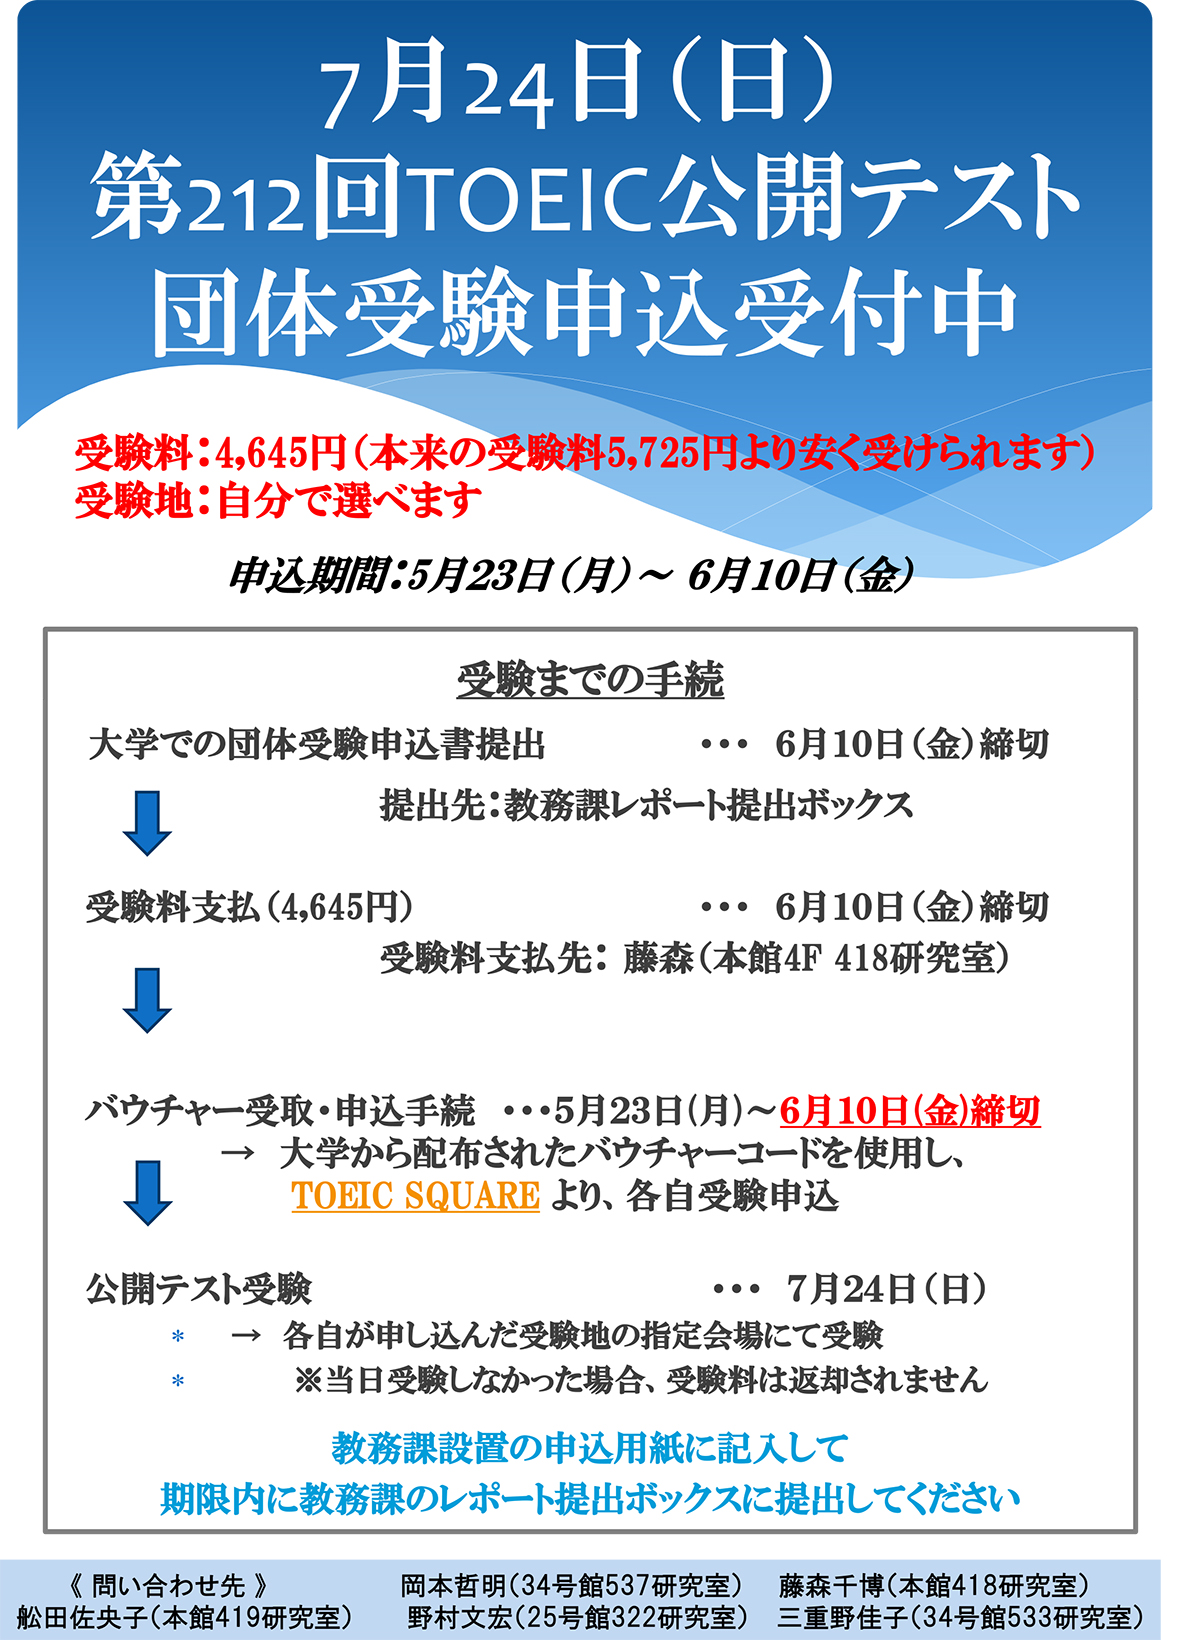 TOEIC公開テストポスター2016_July.jpg